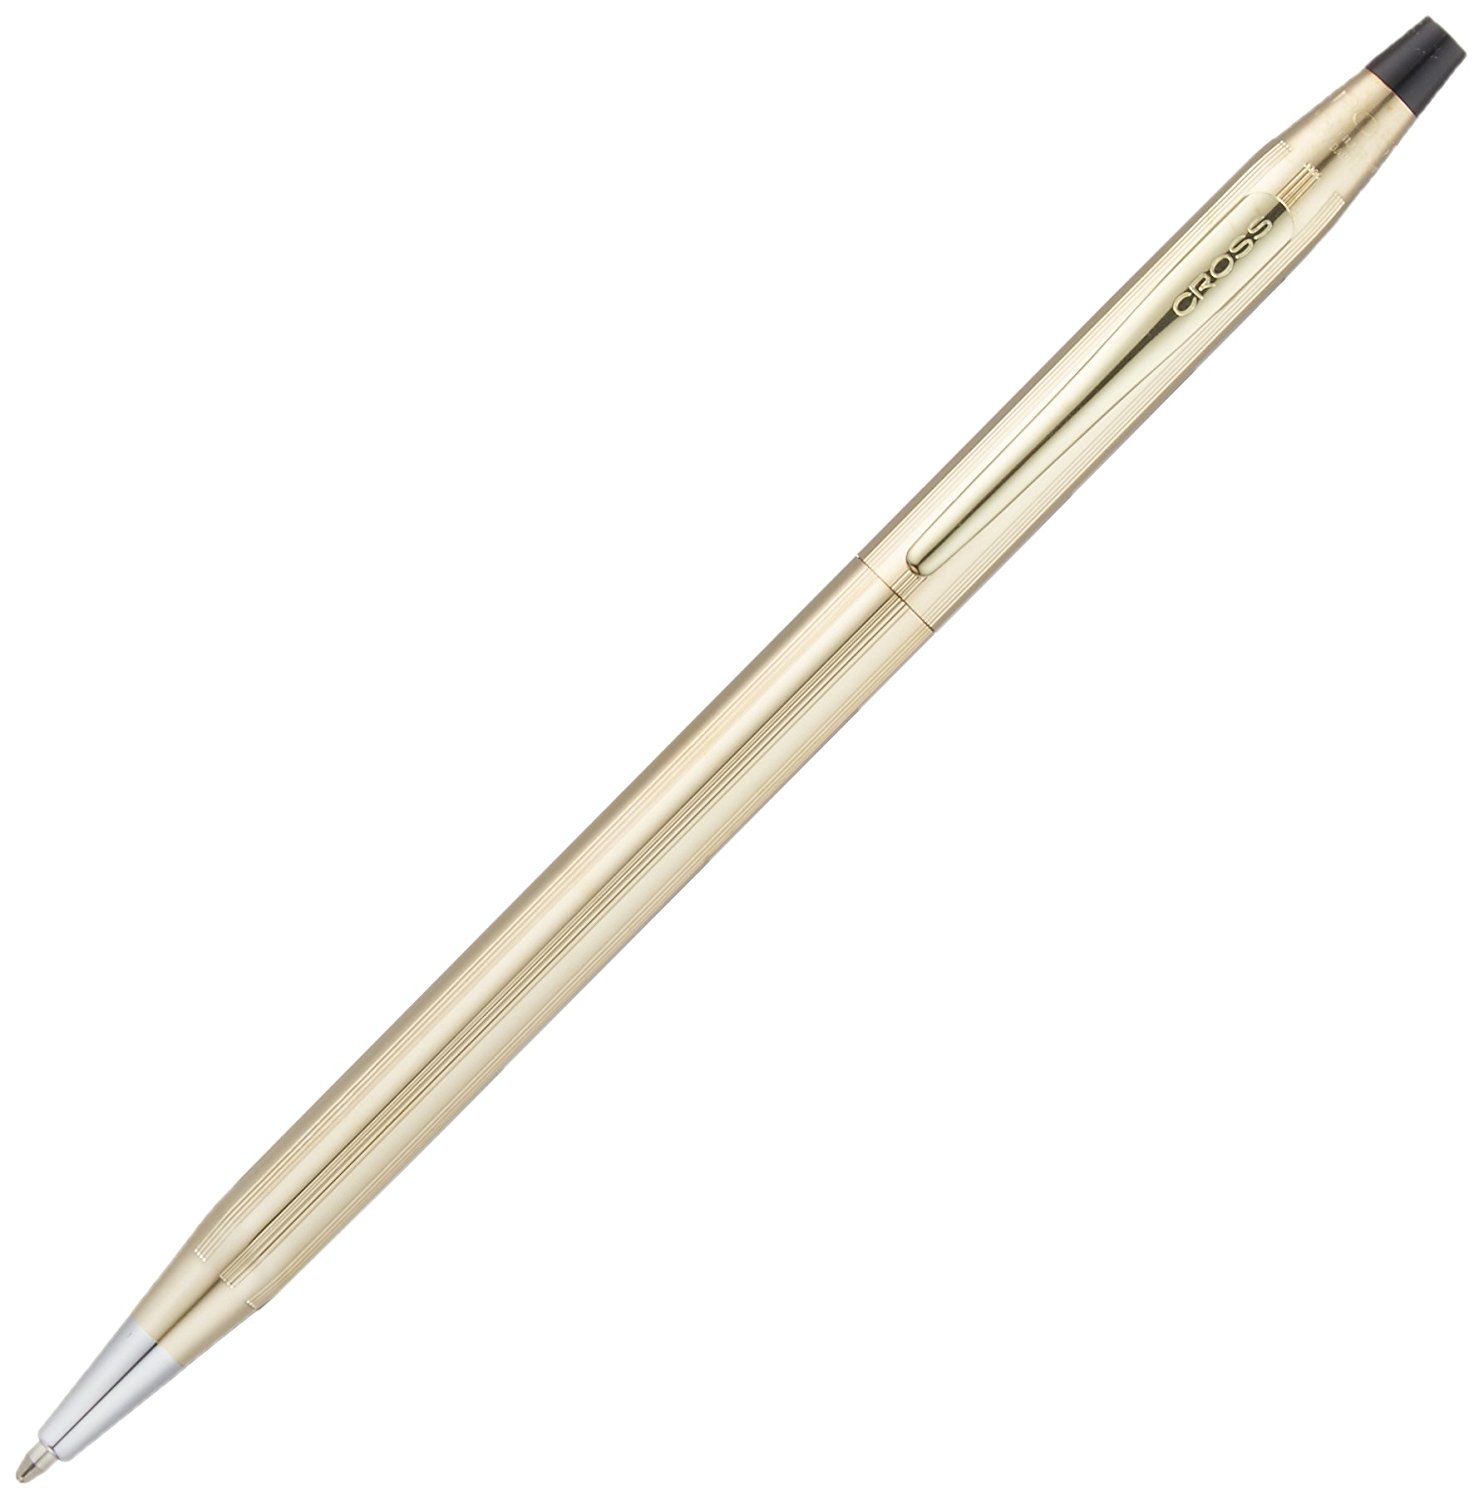 Amazon.com : Cross Classic Century 10KT Gold-Filled Ballpoint Pen ...